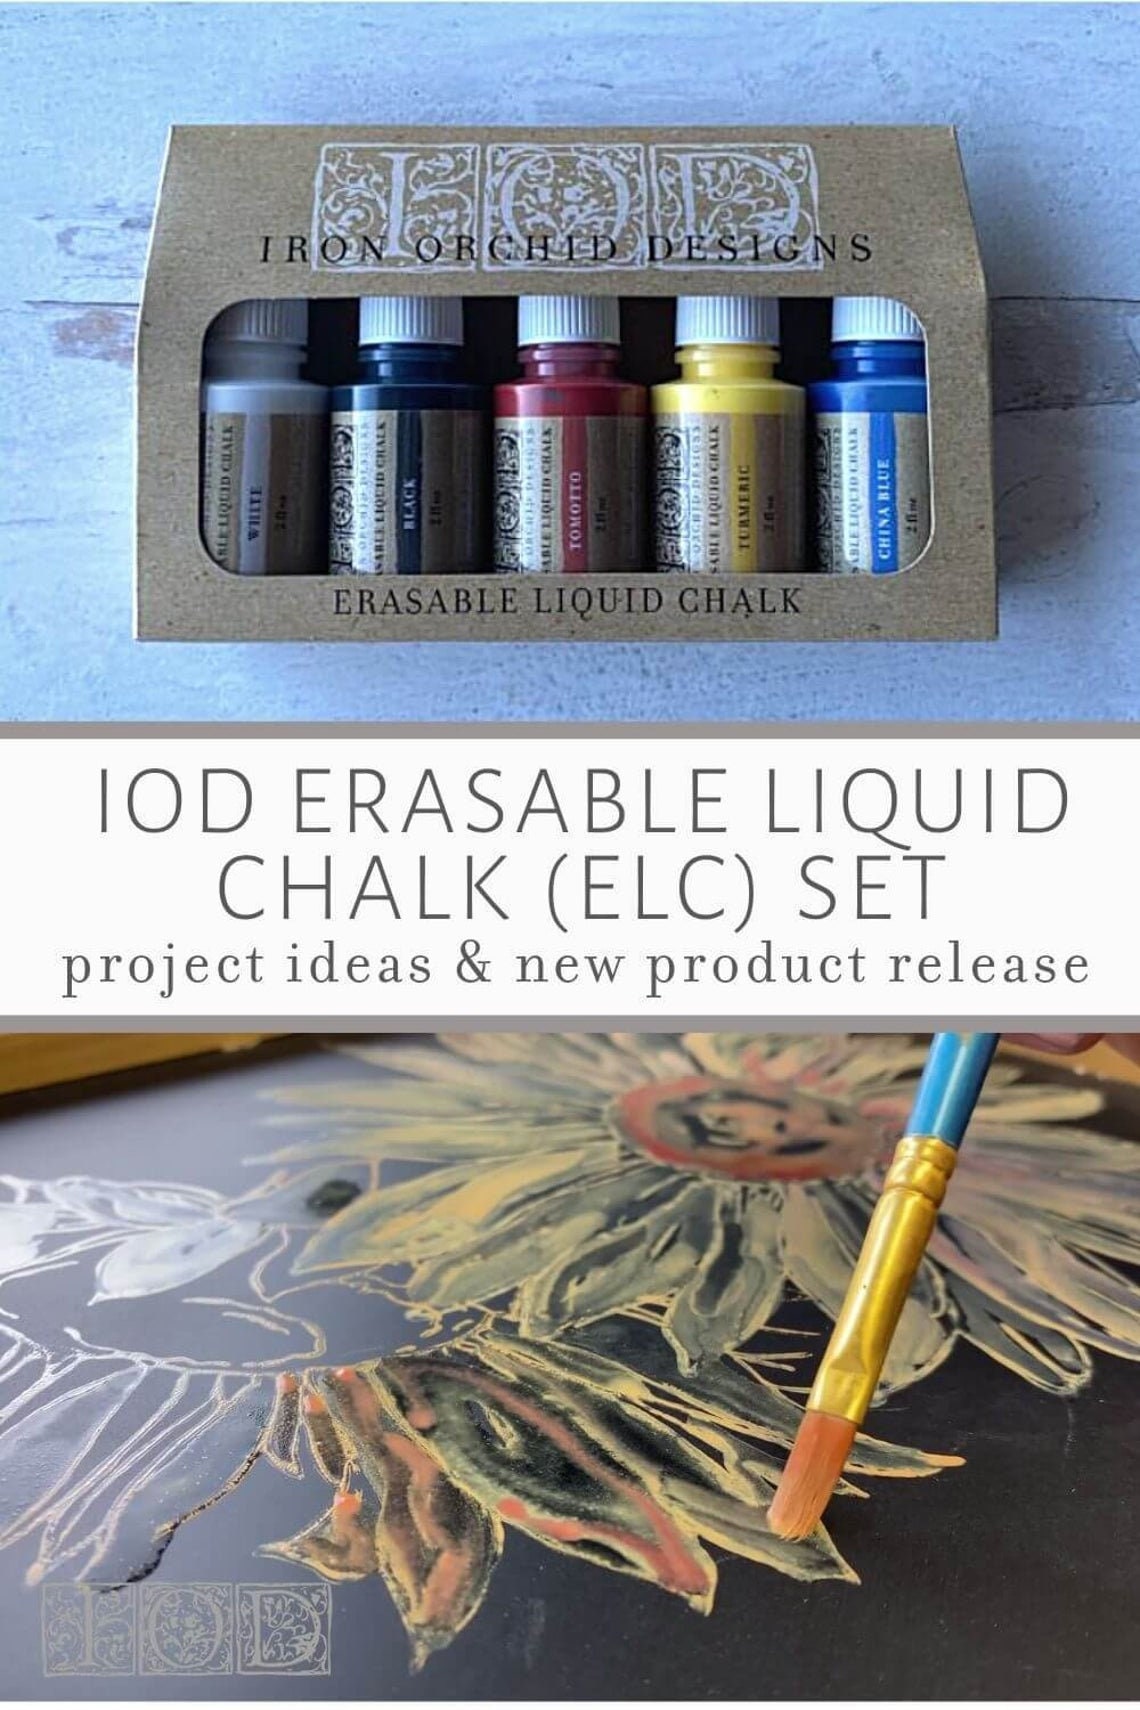 IOD Erasable Liquid Chalk 5 Pack Iron Orchid Designs Chalk Set